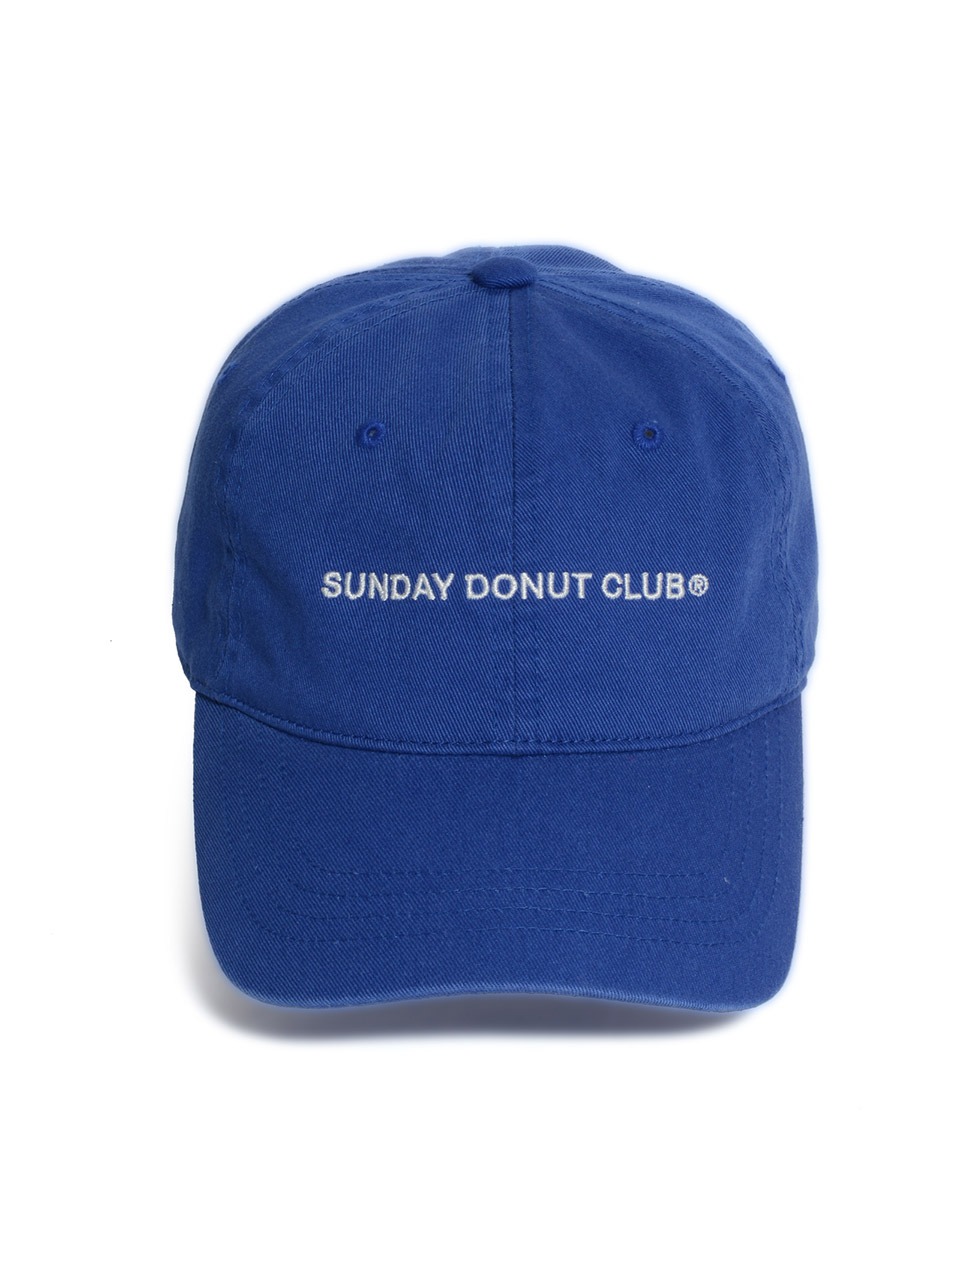 SUNDAY DONUT CLUB CAP [Blue]